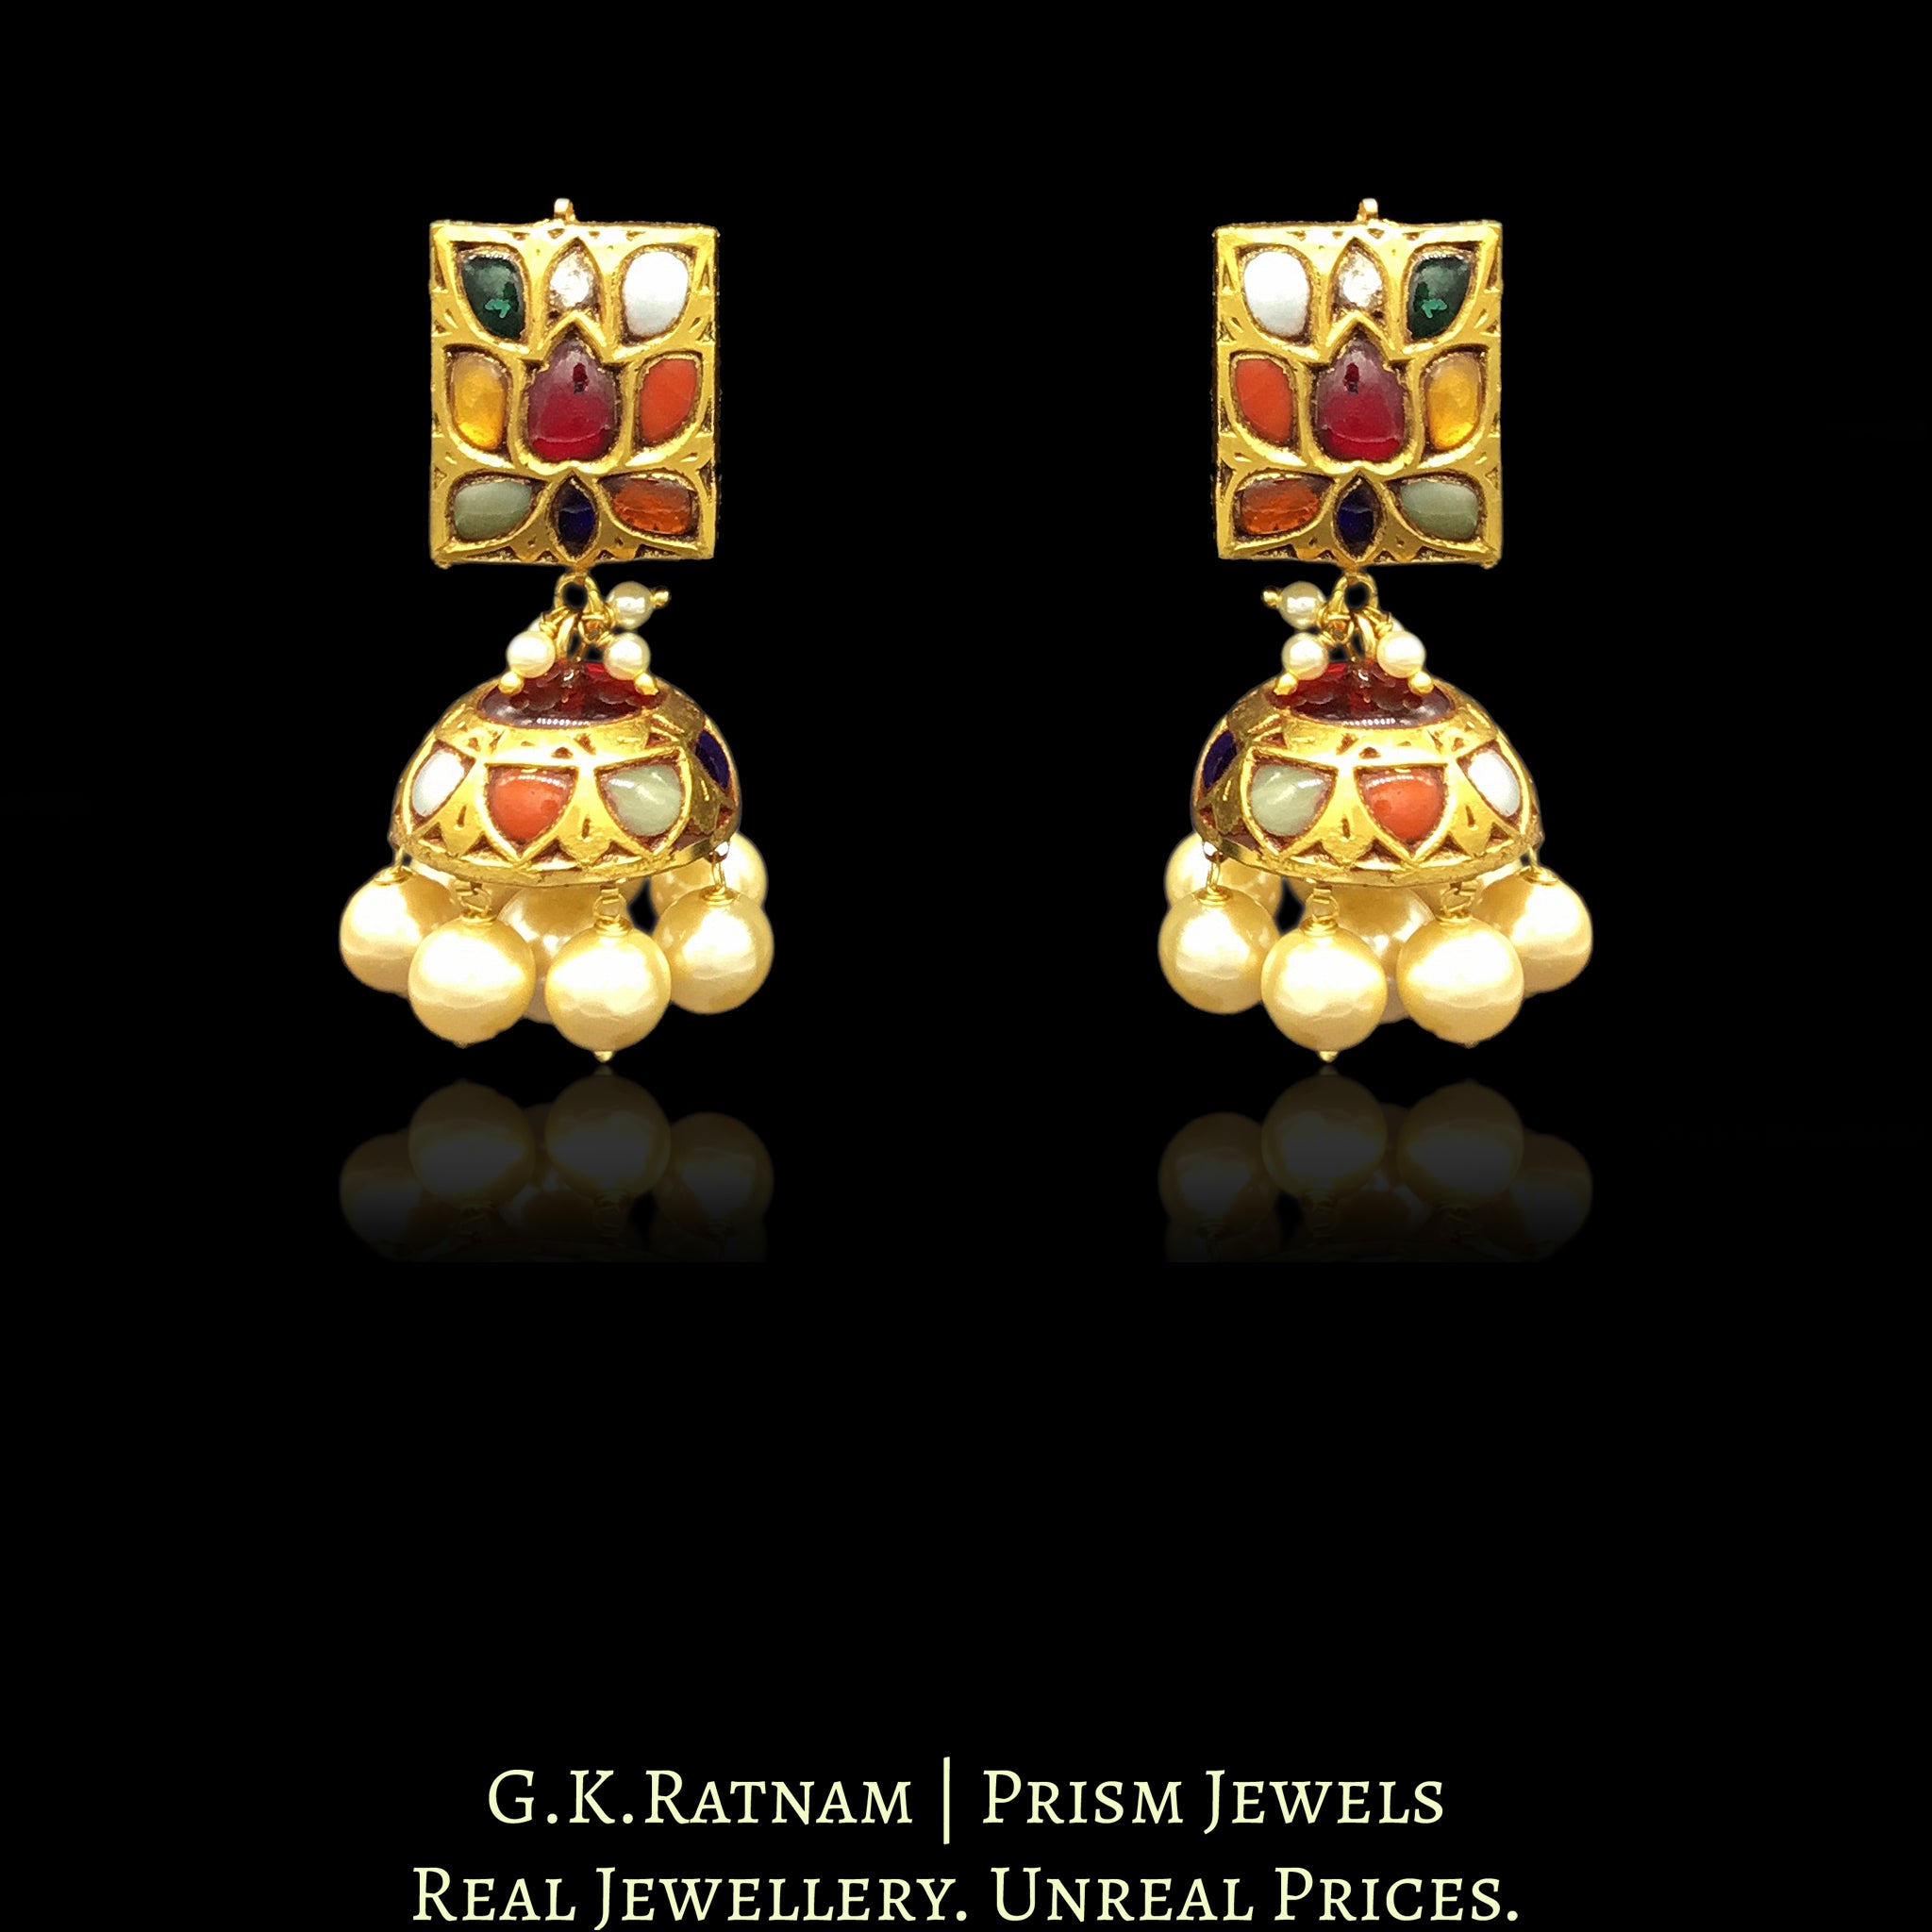 23k Gold and Diamond Polki Navratna rectangle-shaped Tops & Jhumki Earring Pair with lustrous pearls - G. K. Ratnam